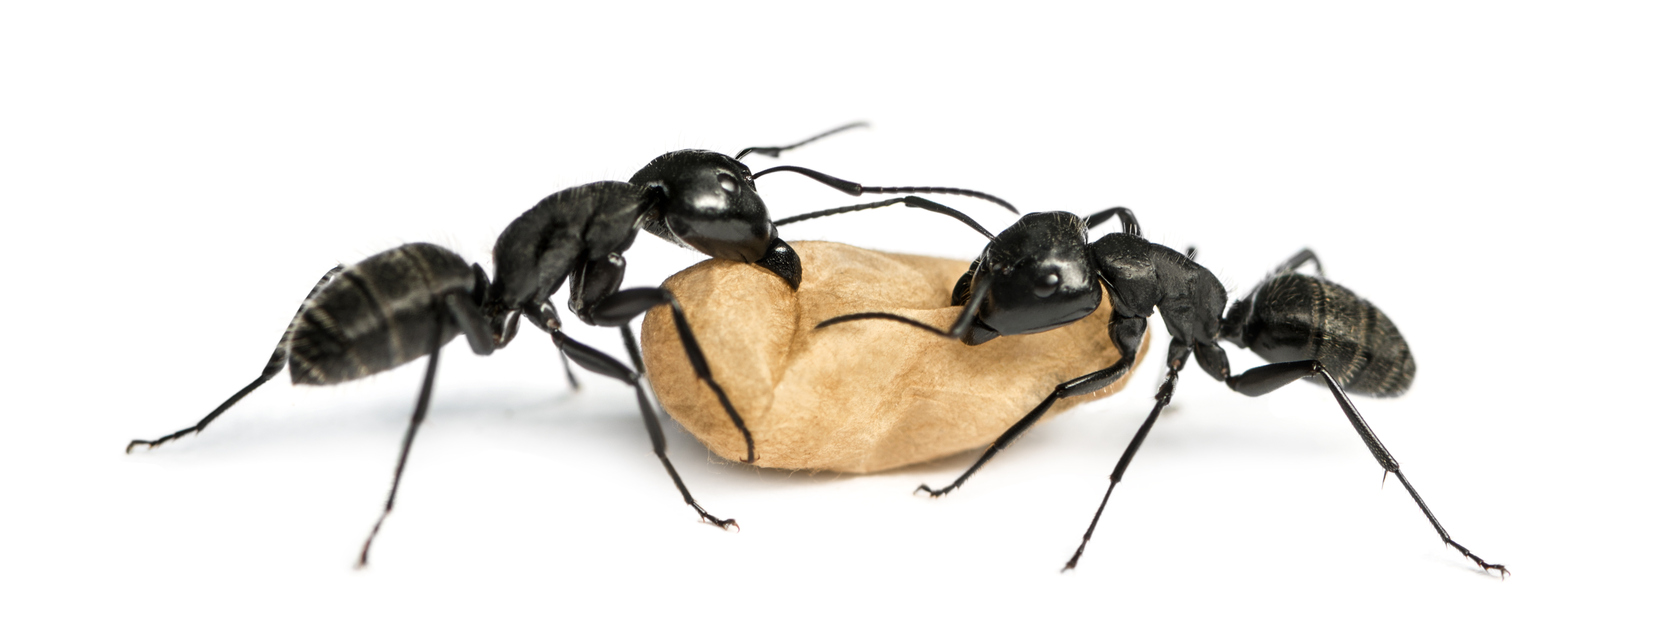 Carpenter Ant Control Carpenter Ant Treatments How To Treat Carpenter Ant Nests Best Carpenter Ant Spray